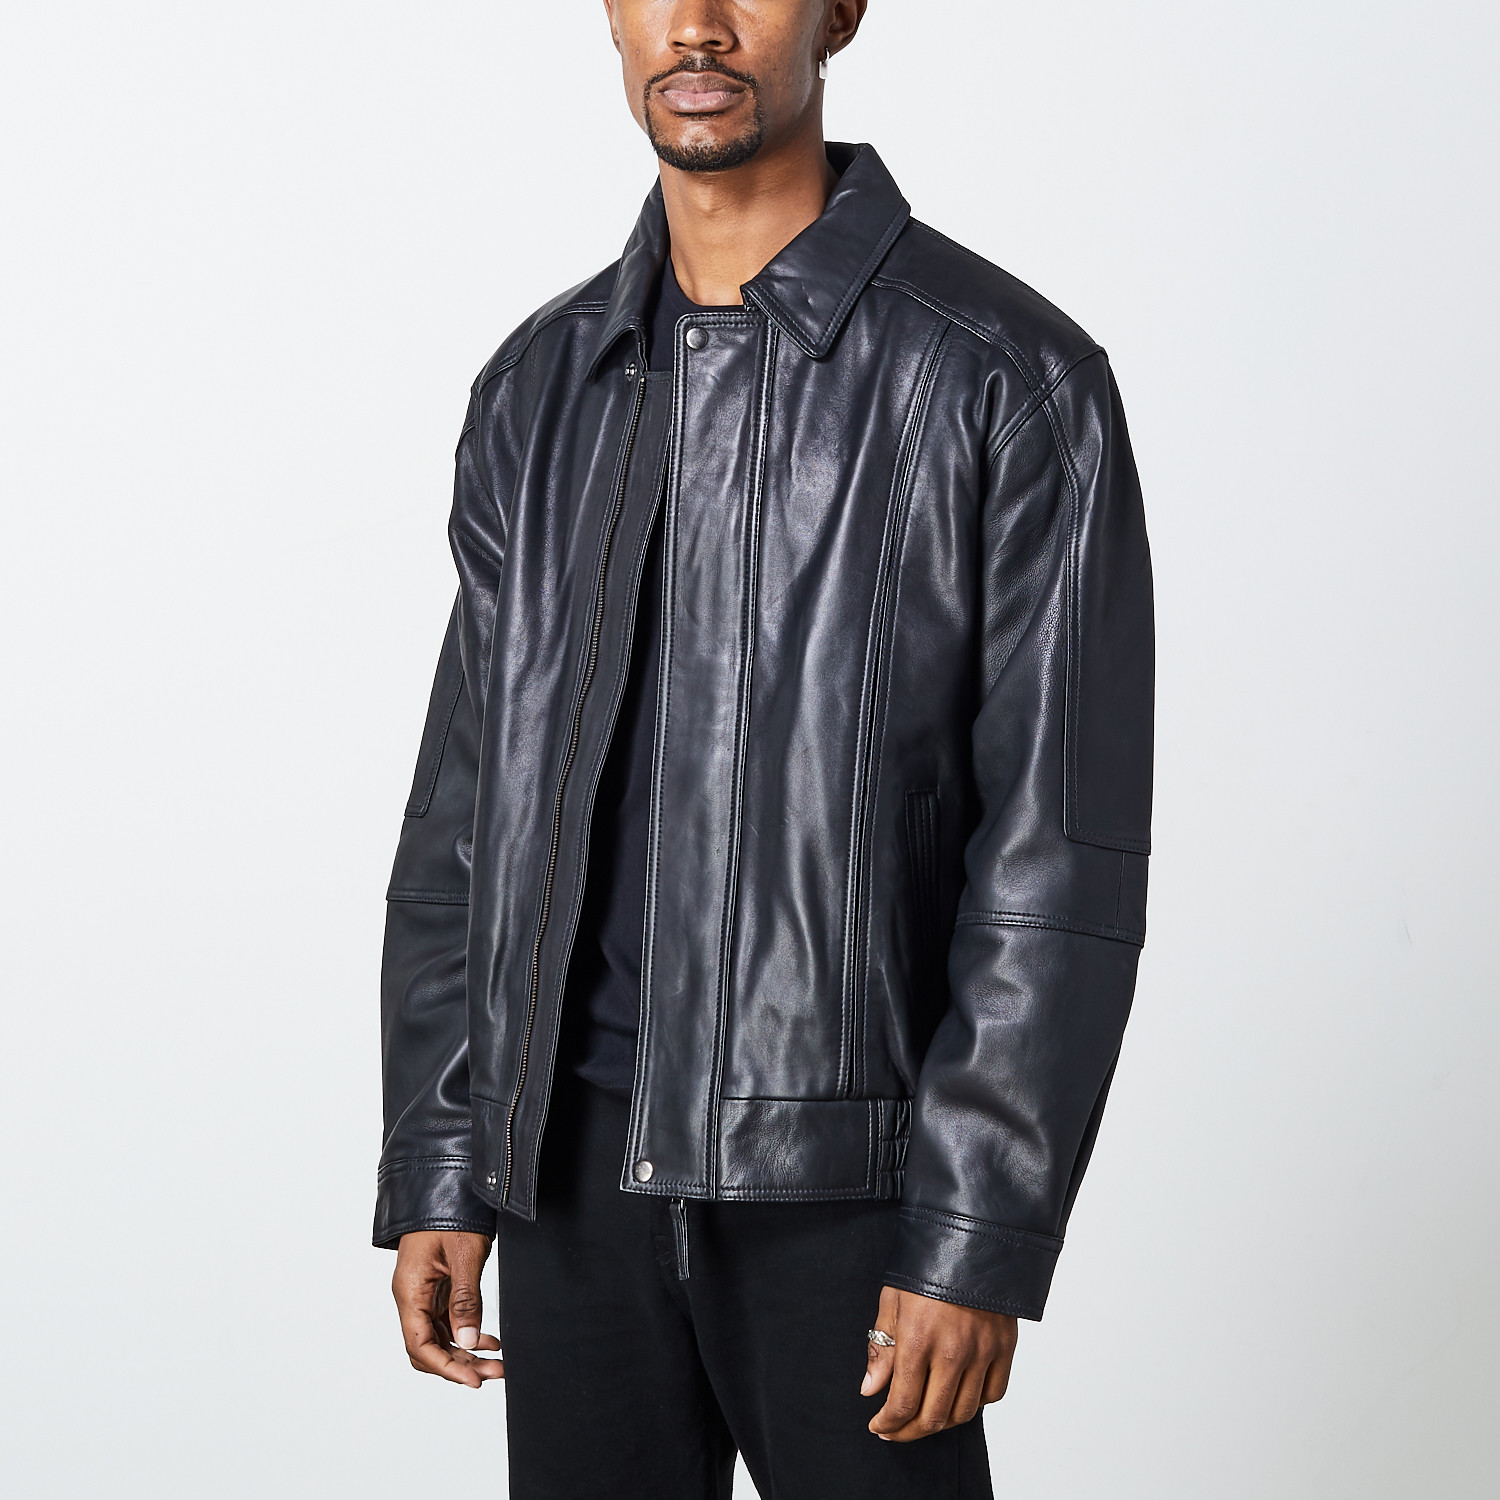 Leonardo Leather Jacket // Black (M) - Everest Leatherwear LTD - Touch ...